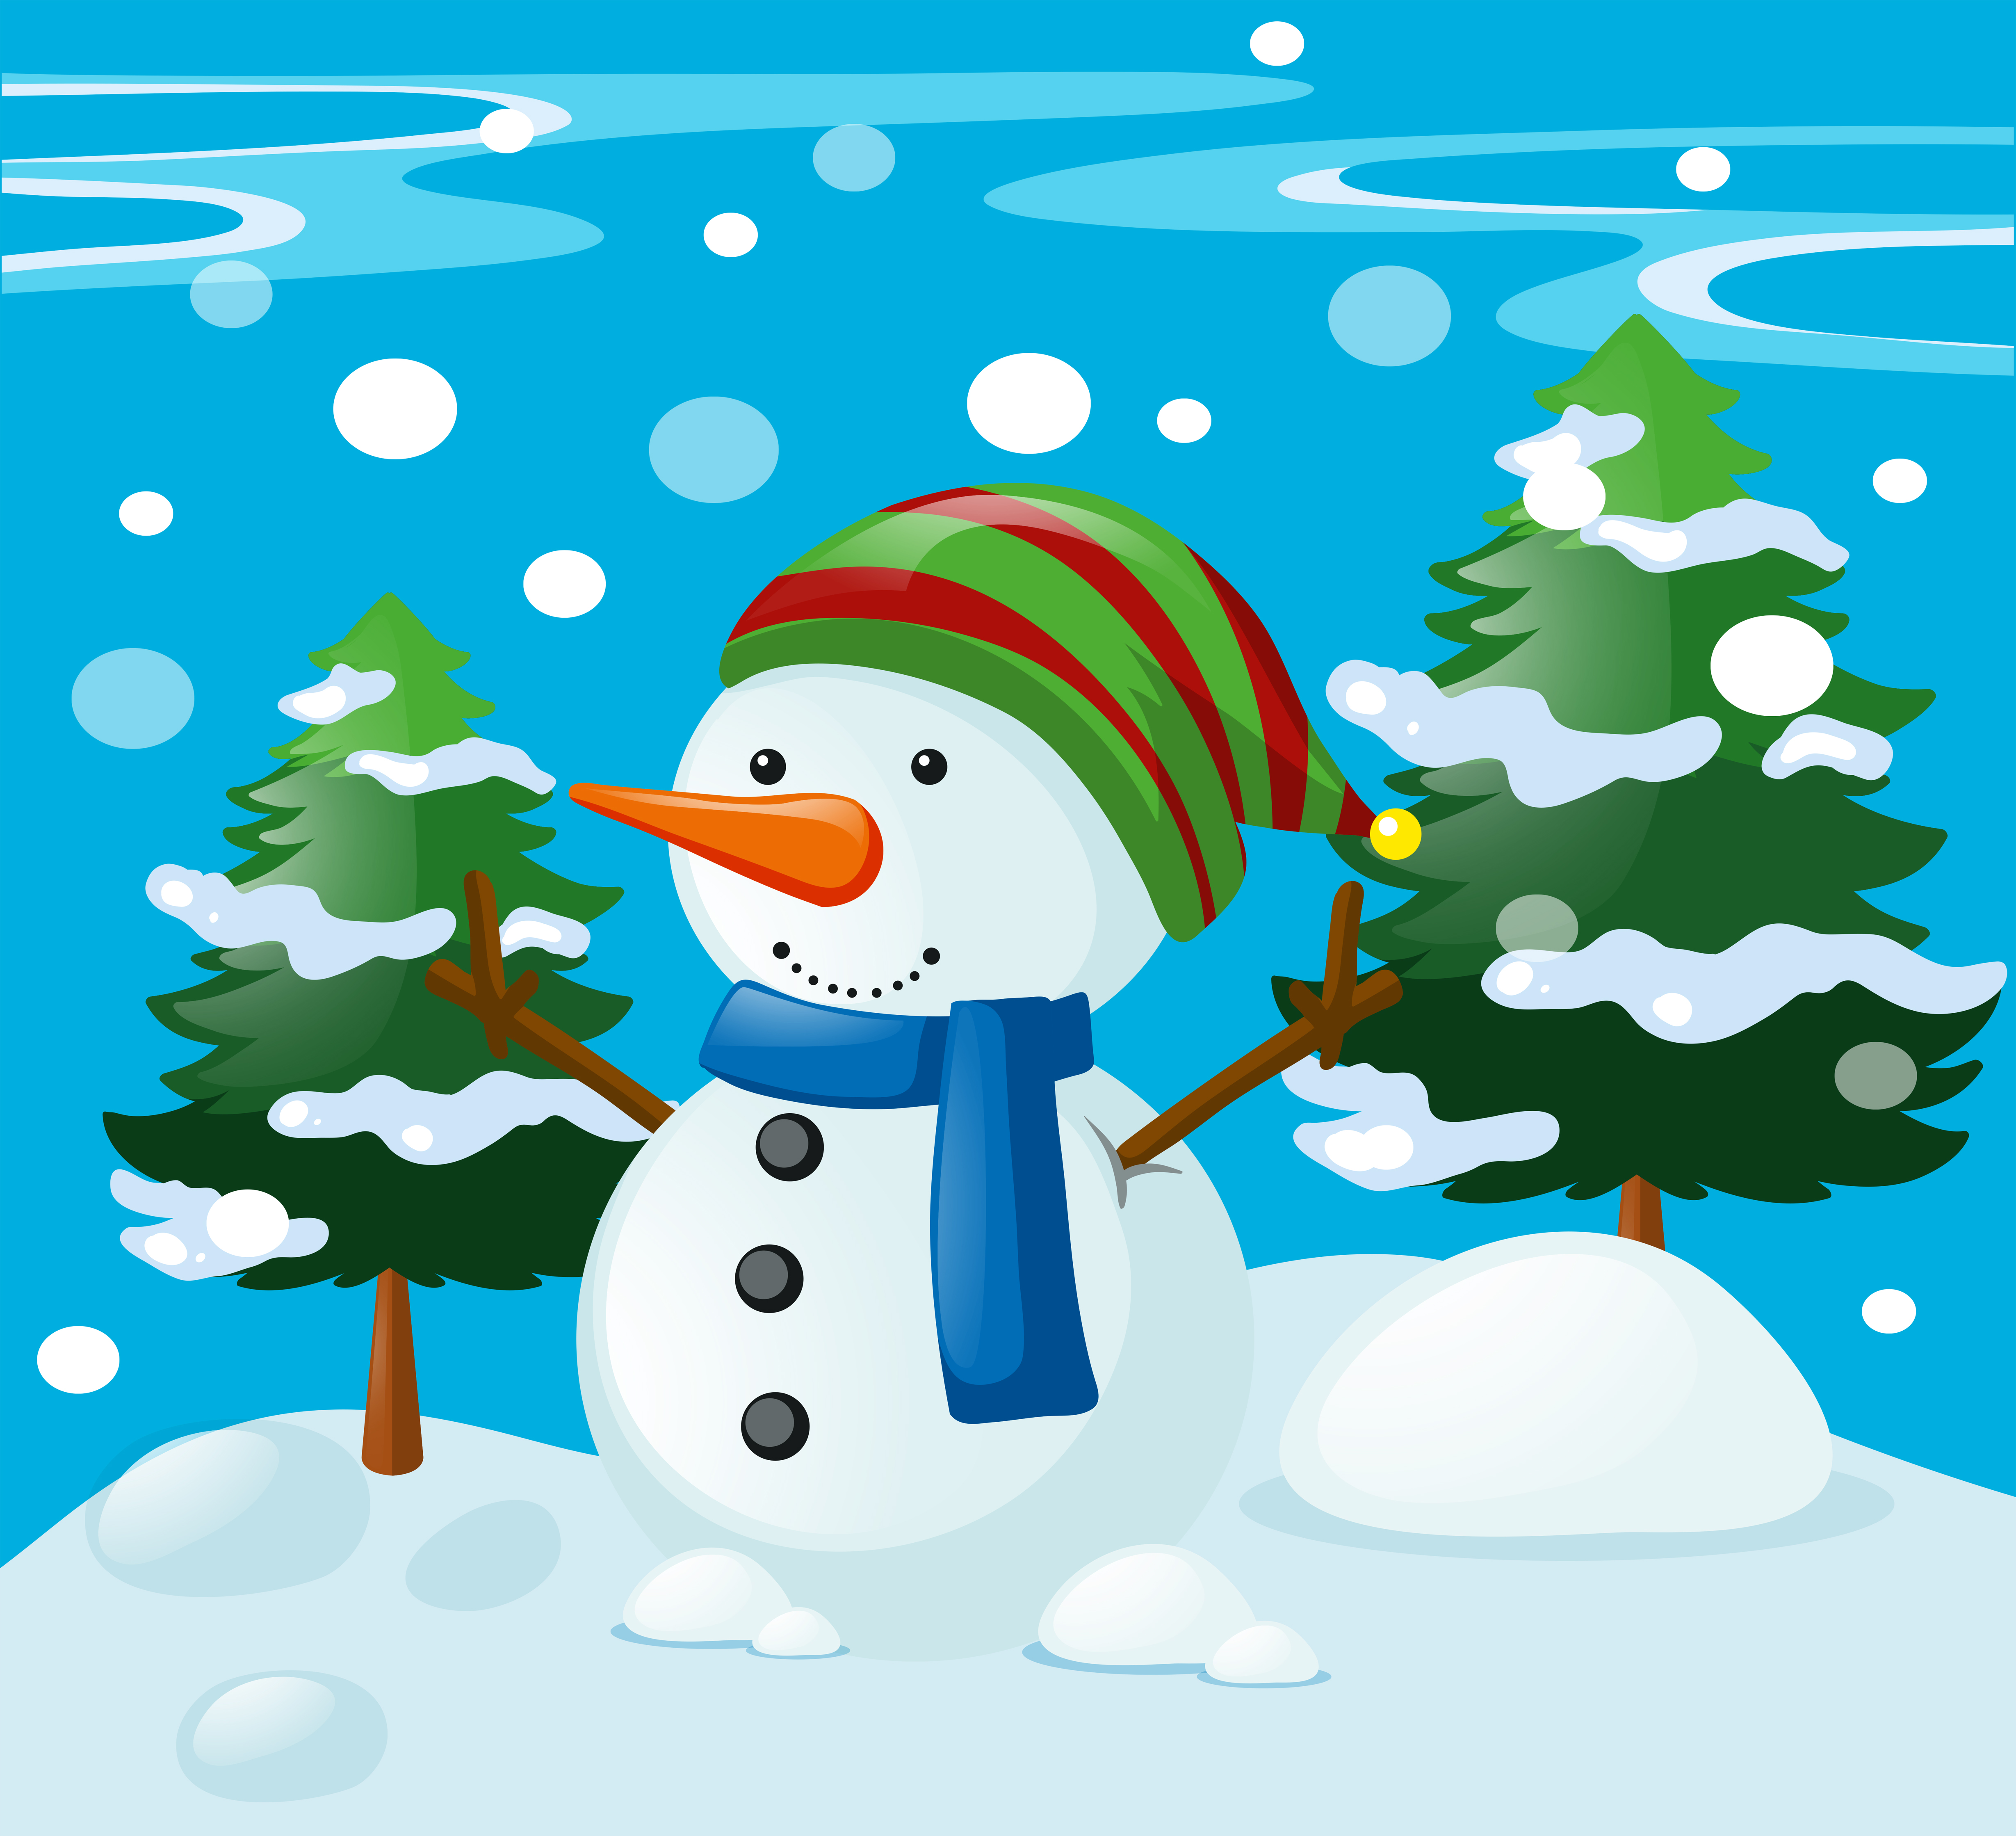 Download Winter scene with snowman in the field - Download Free Vectors, Clipart Graphics & Vector Art